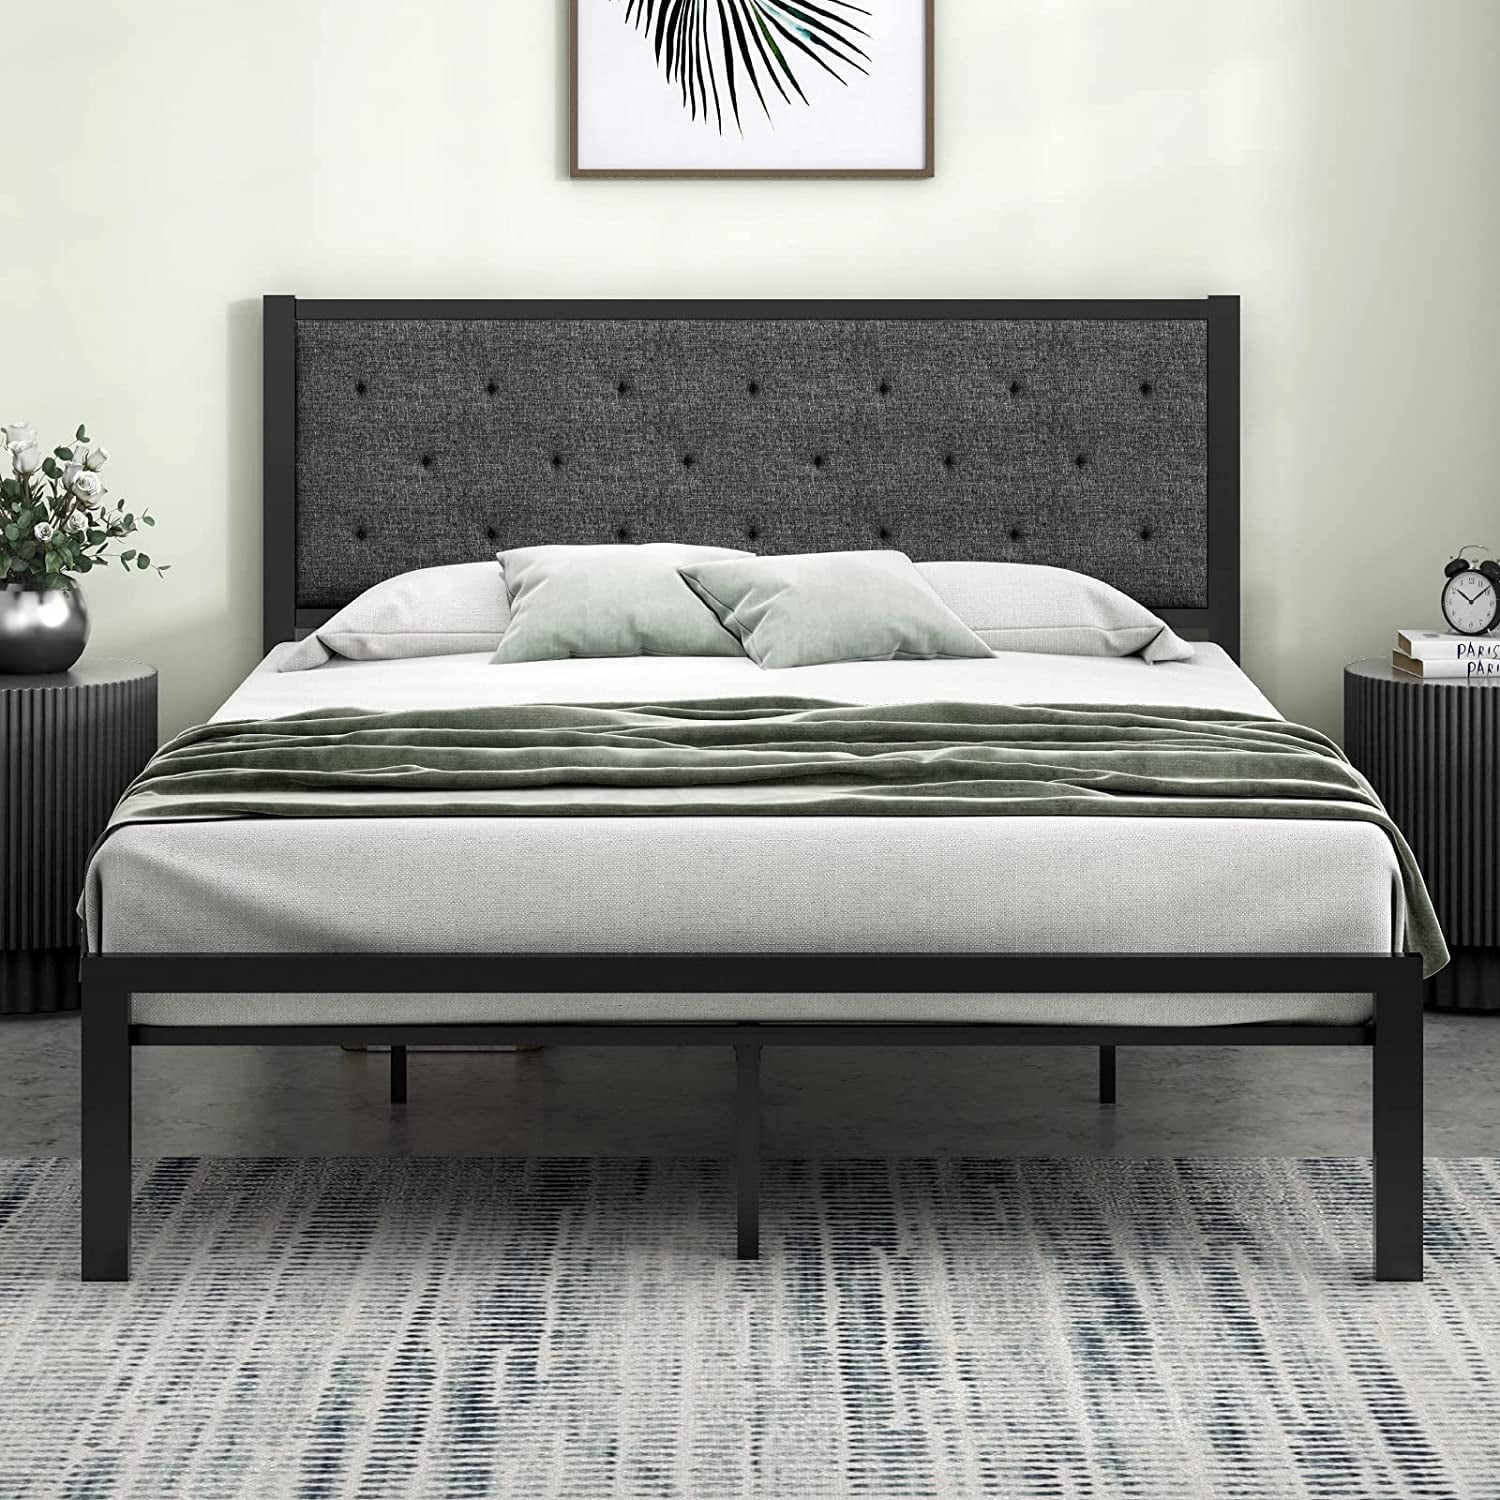 Queen Size Platform Bed Frame w/Tufted Headboard Grey Upholstered Beds Wood 